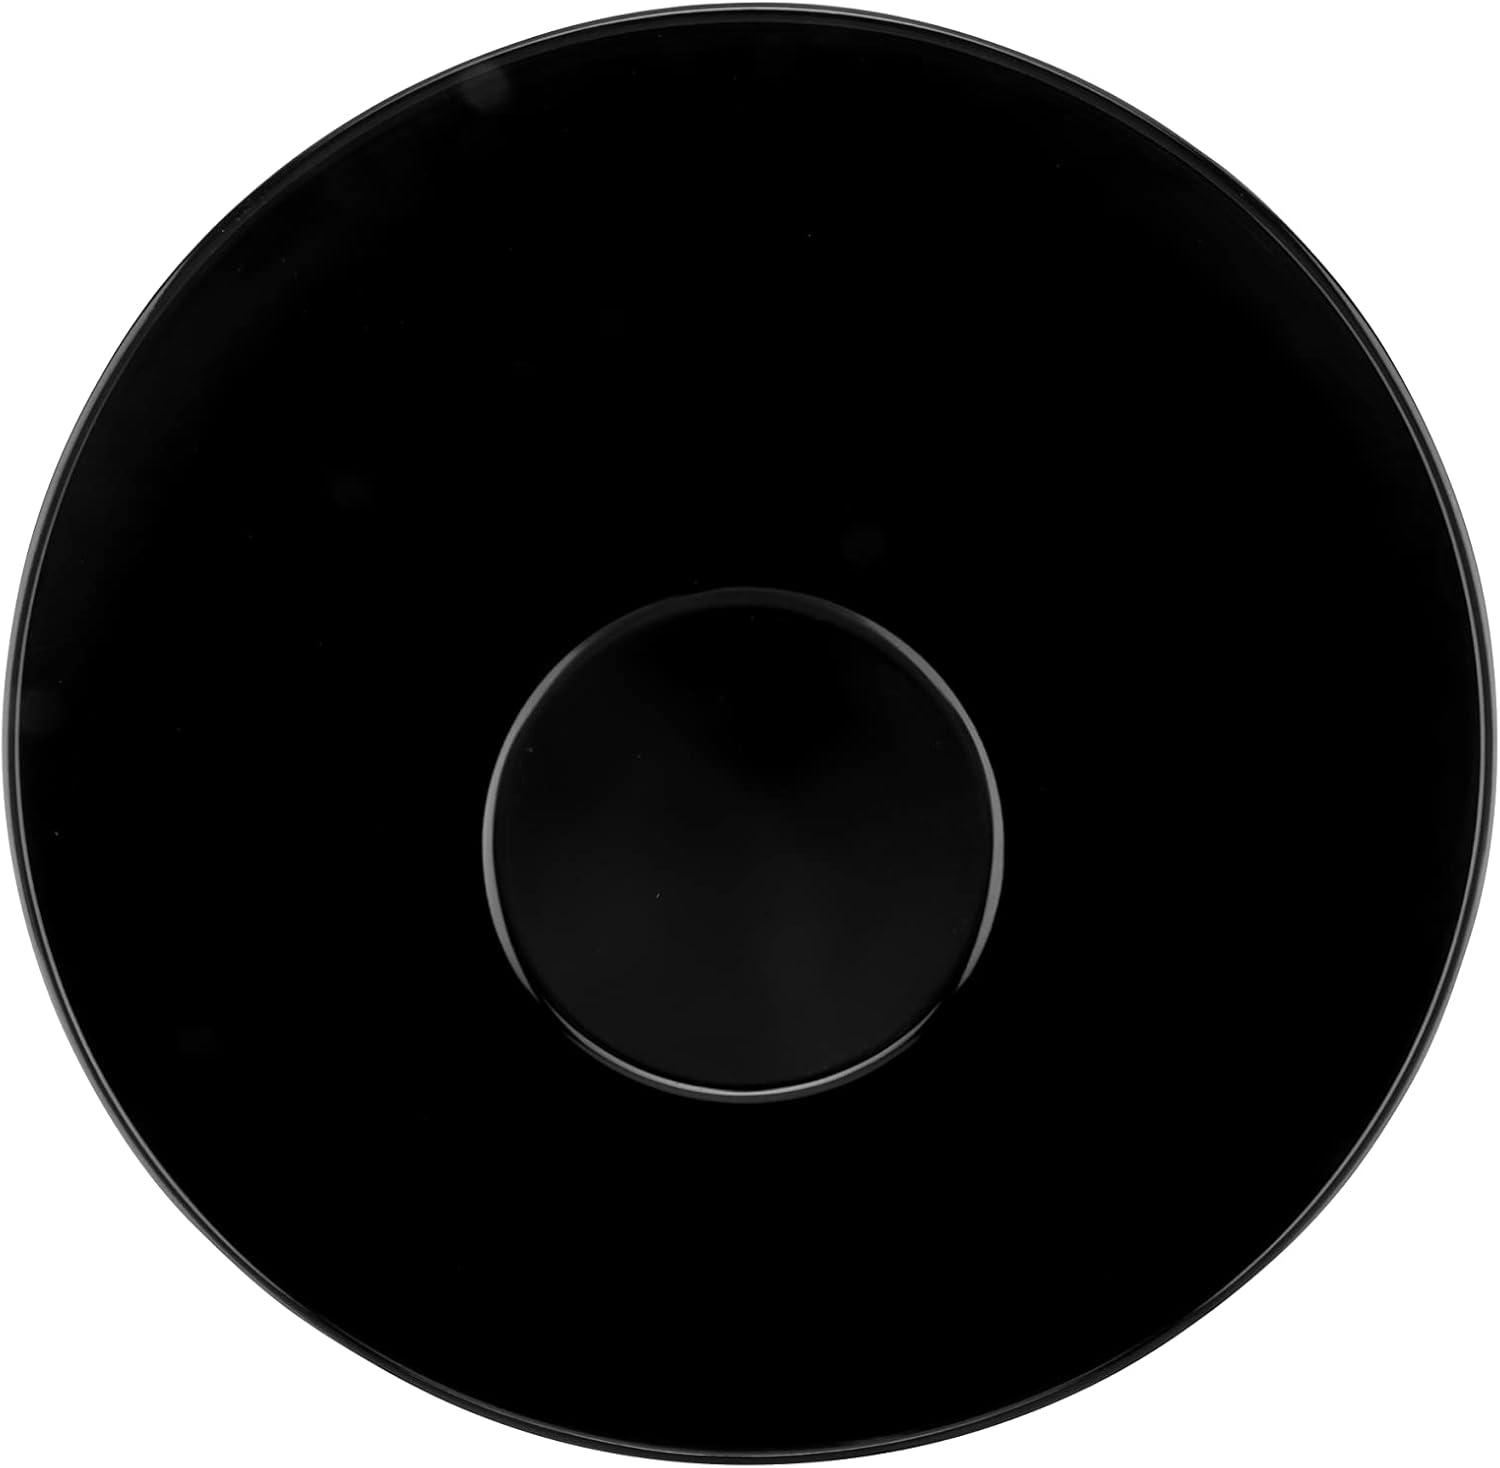 Black Elegance 1.9 Quart Cascading Serving Bowl for All Seasons